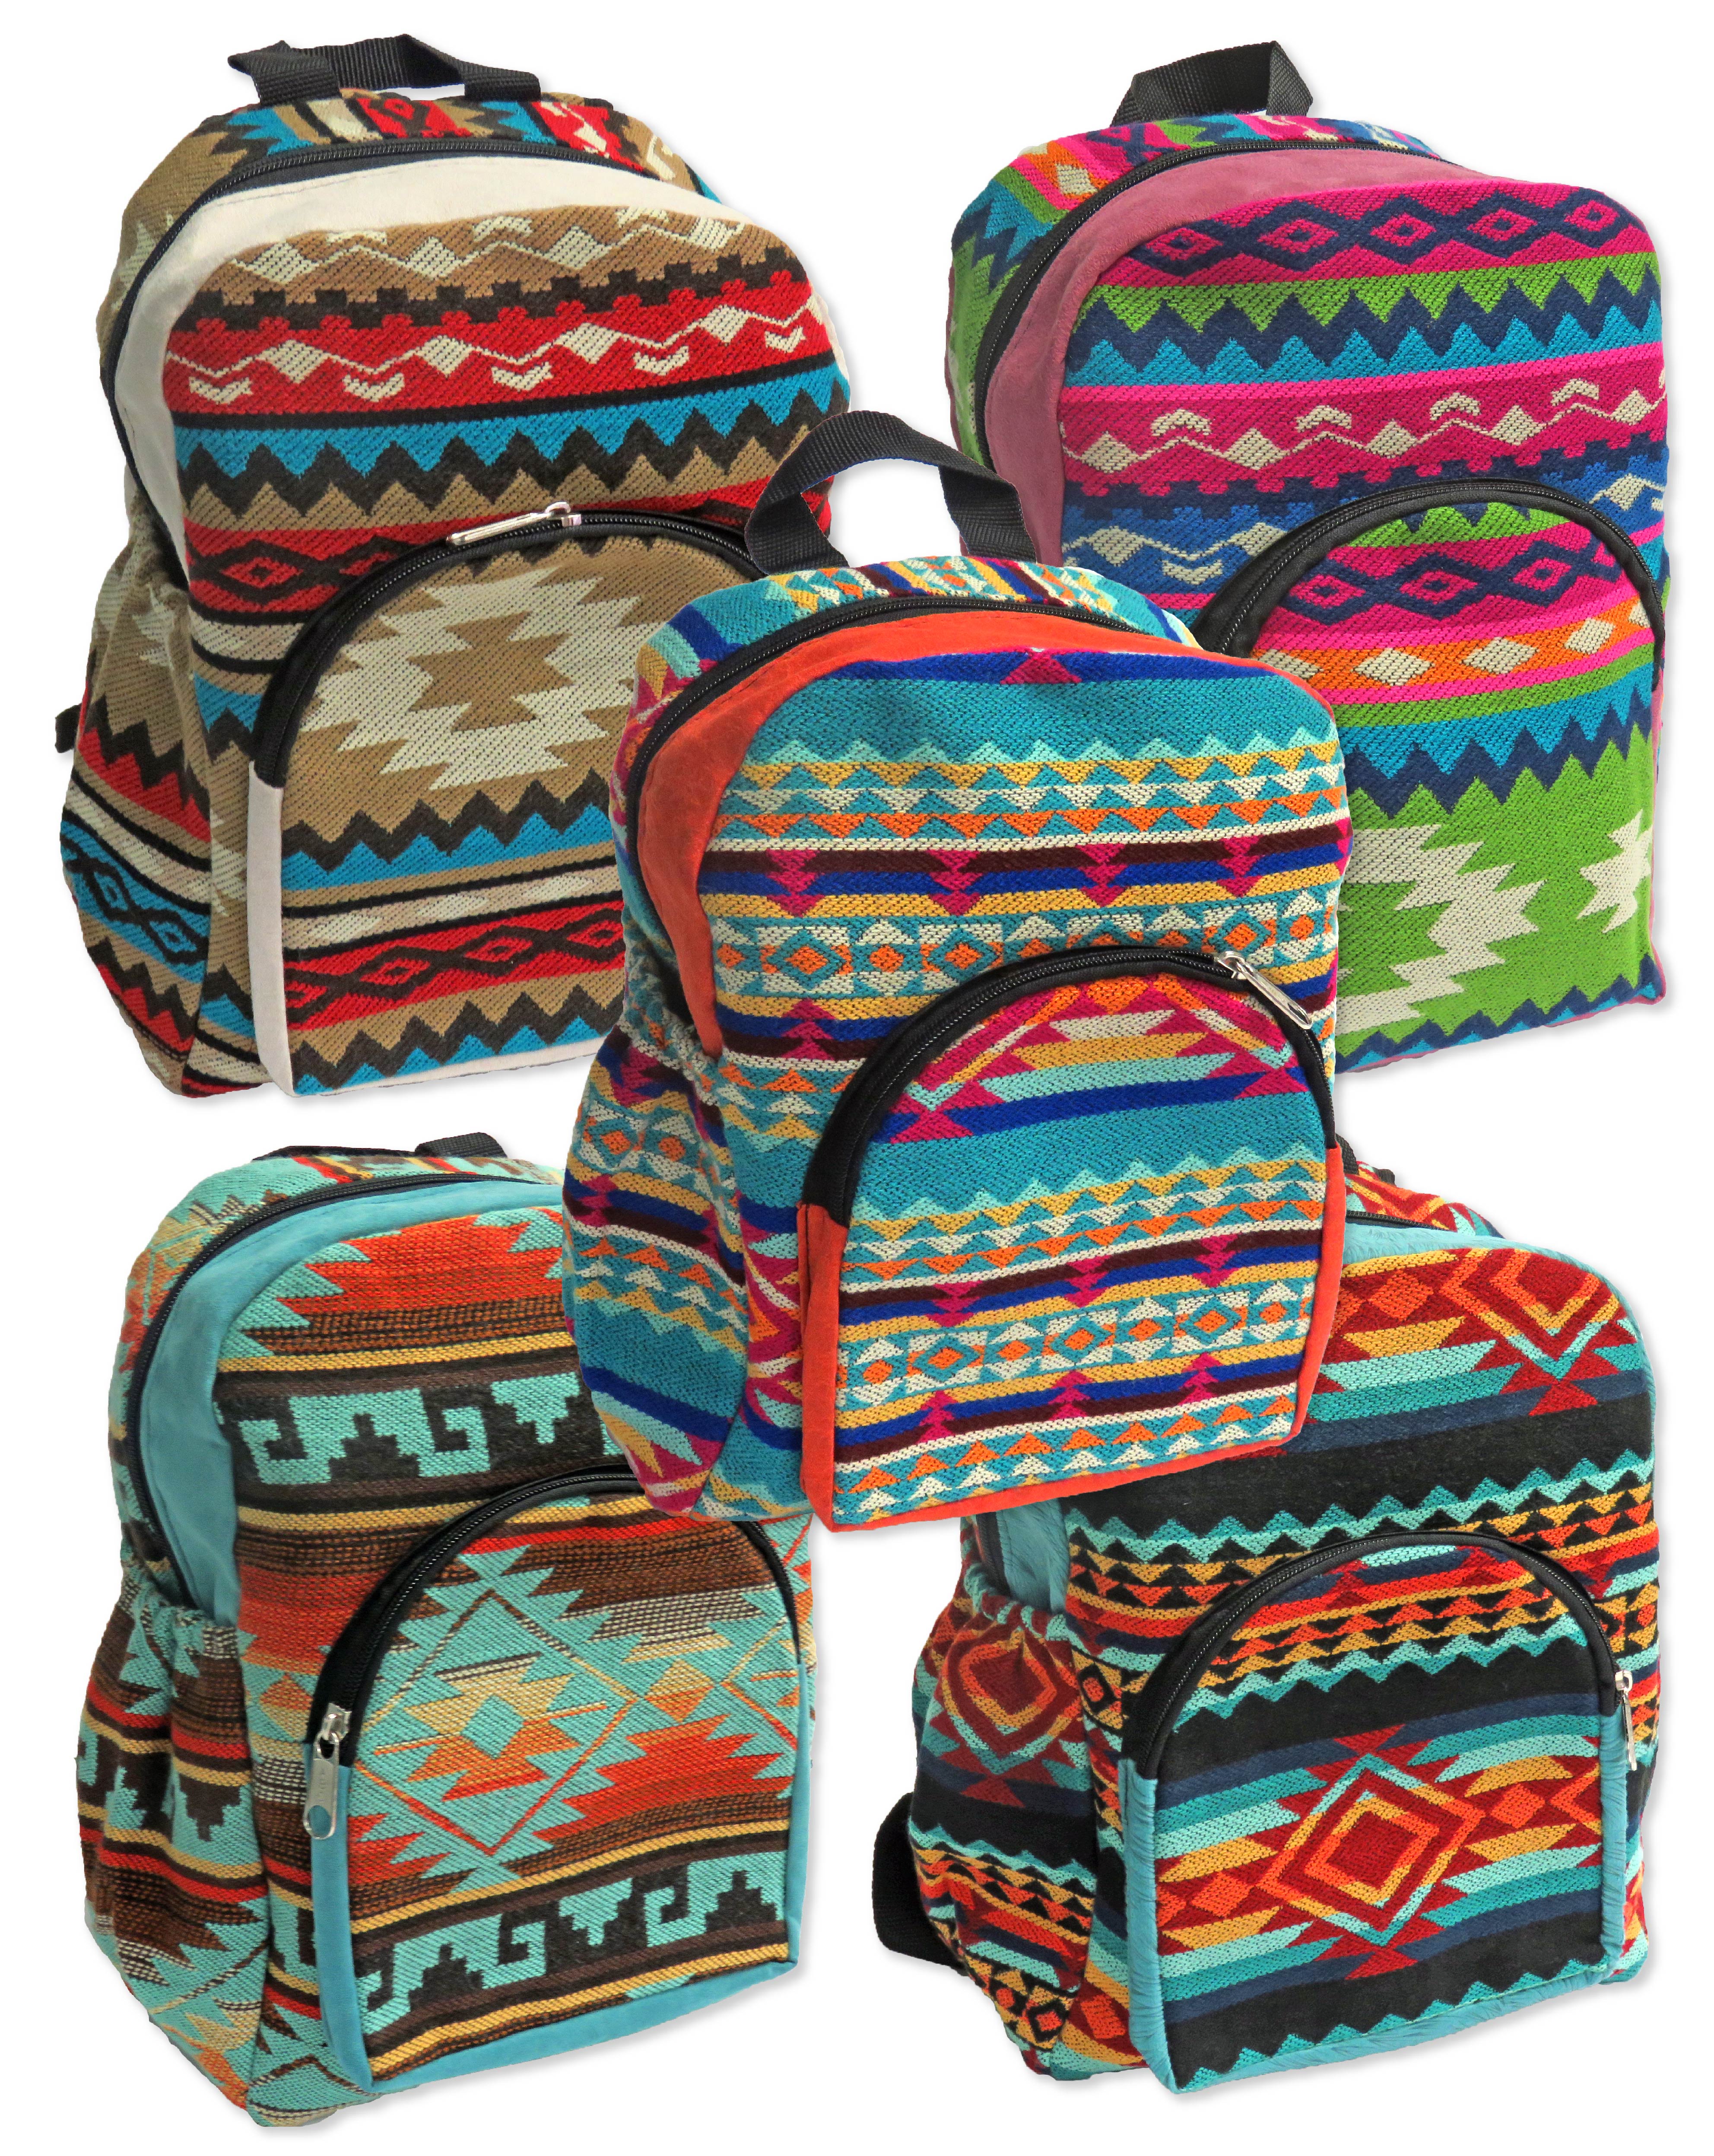 Youth-Sized Backpacks